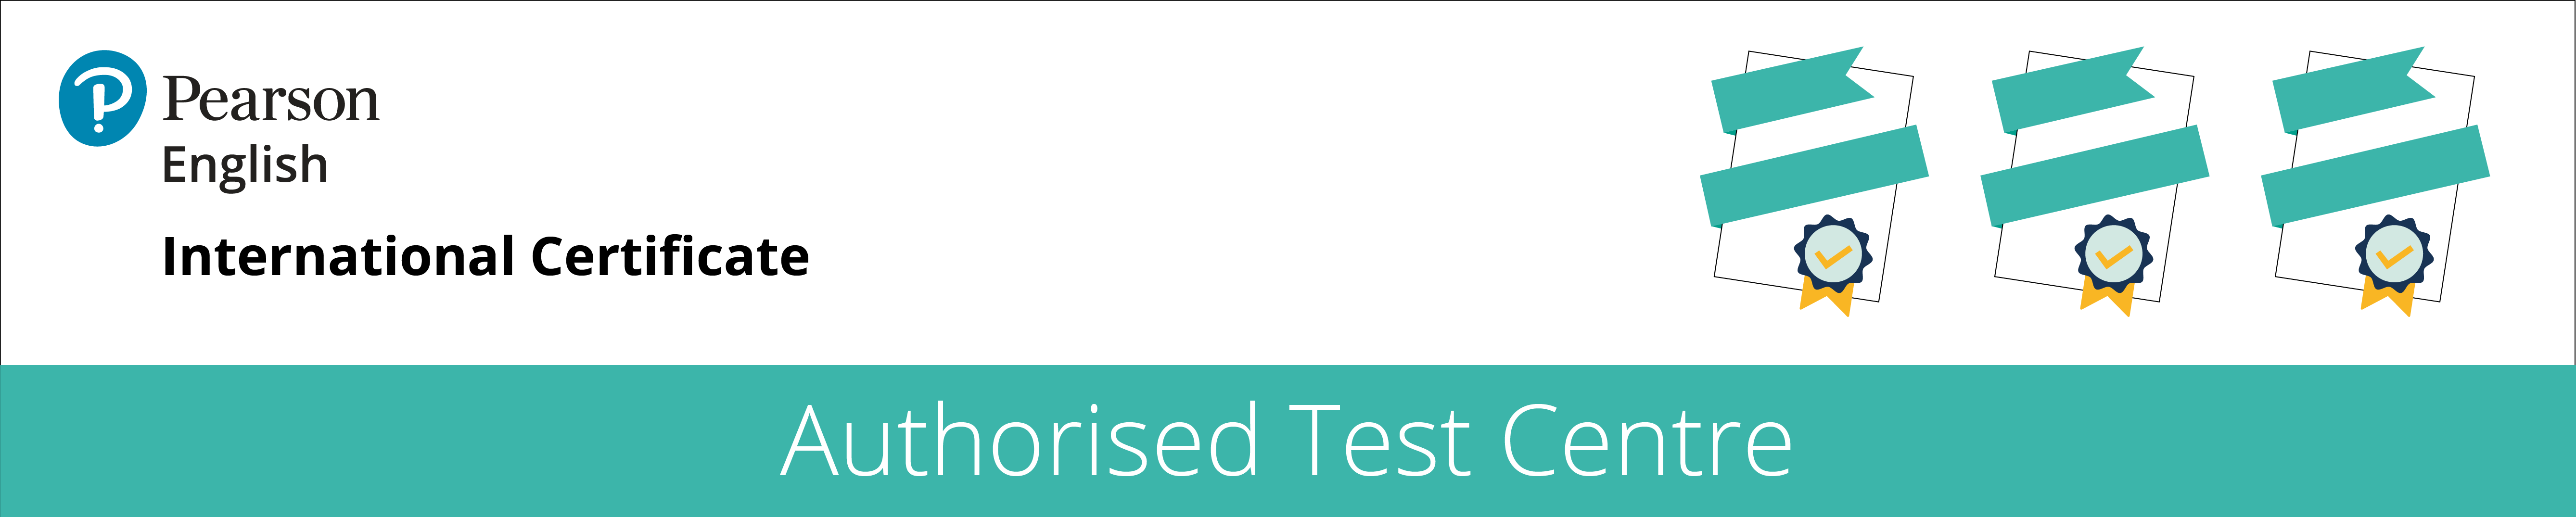 International Certificate - Test Centre